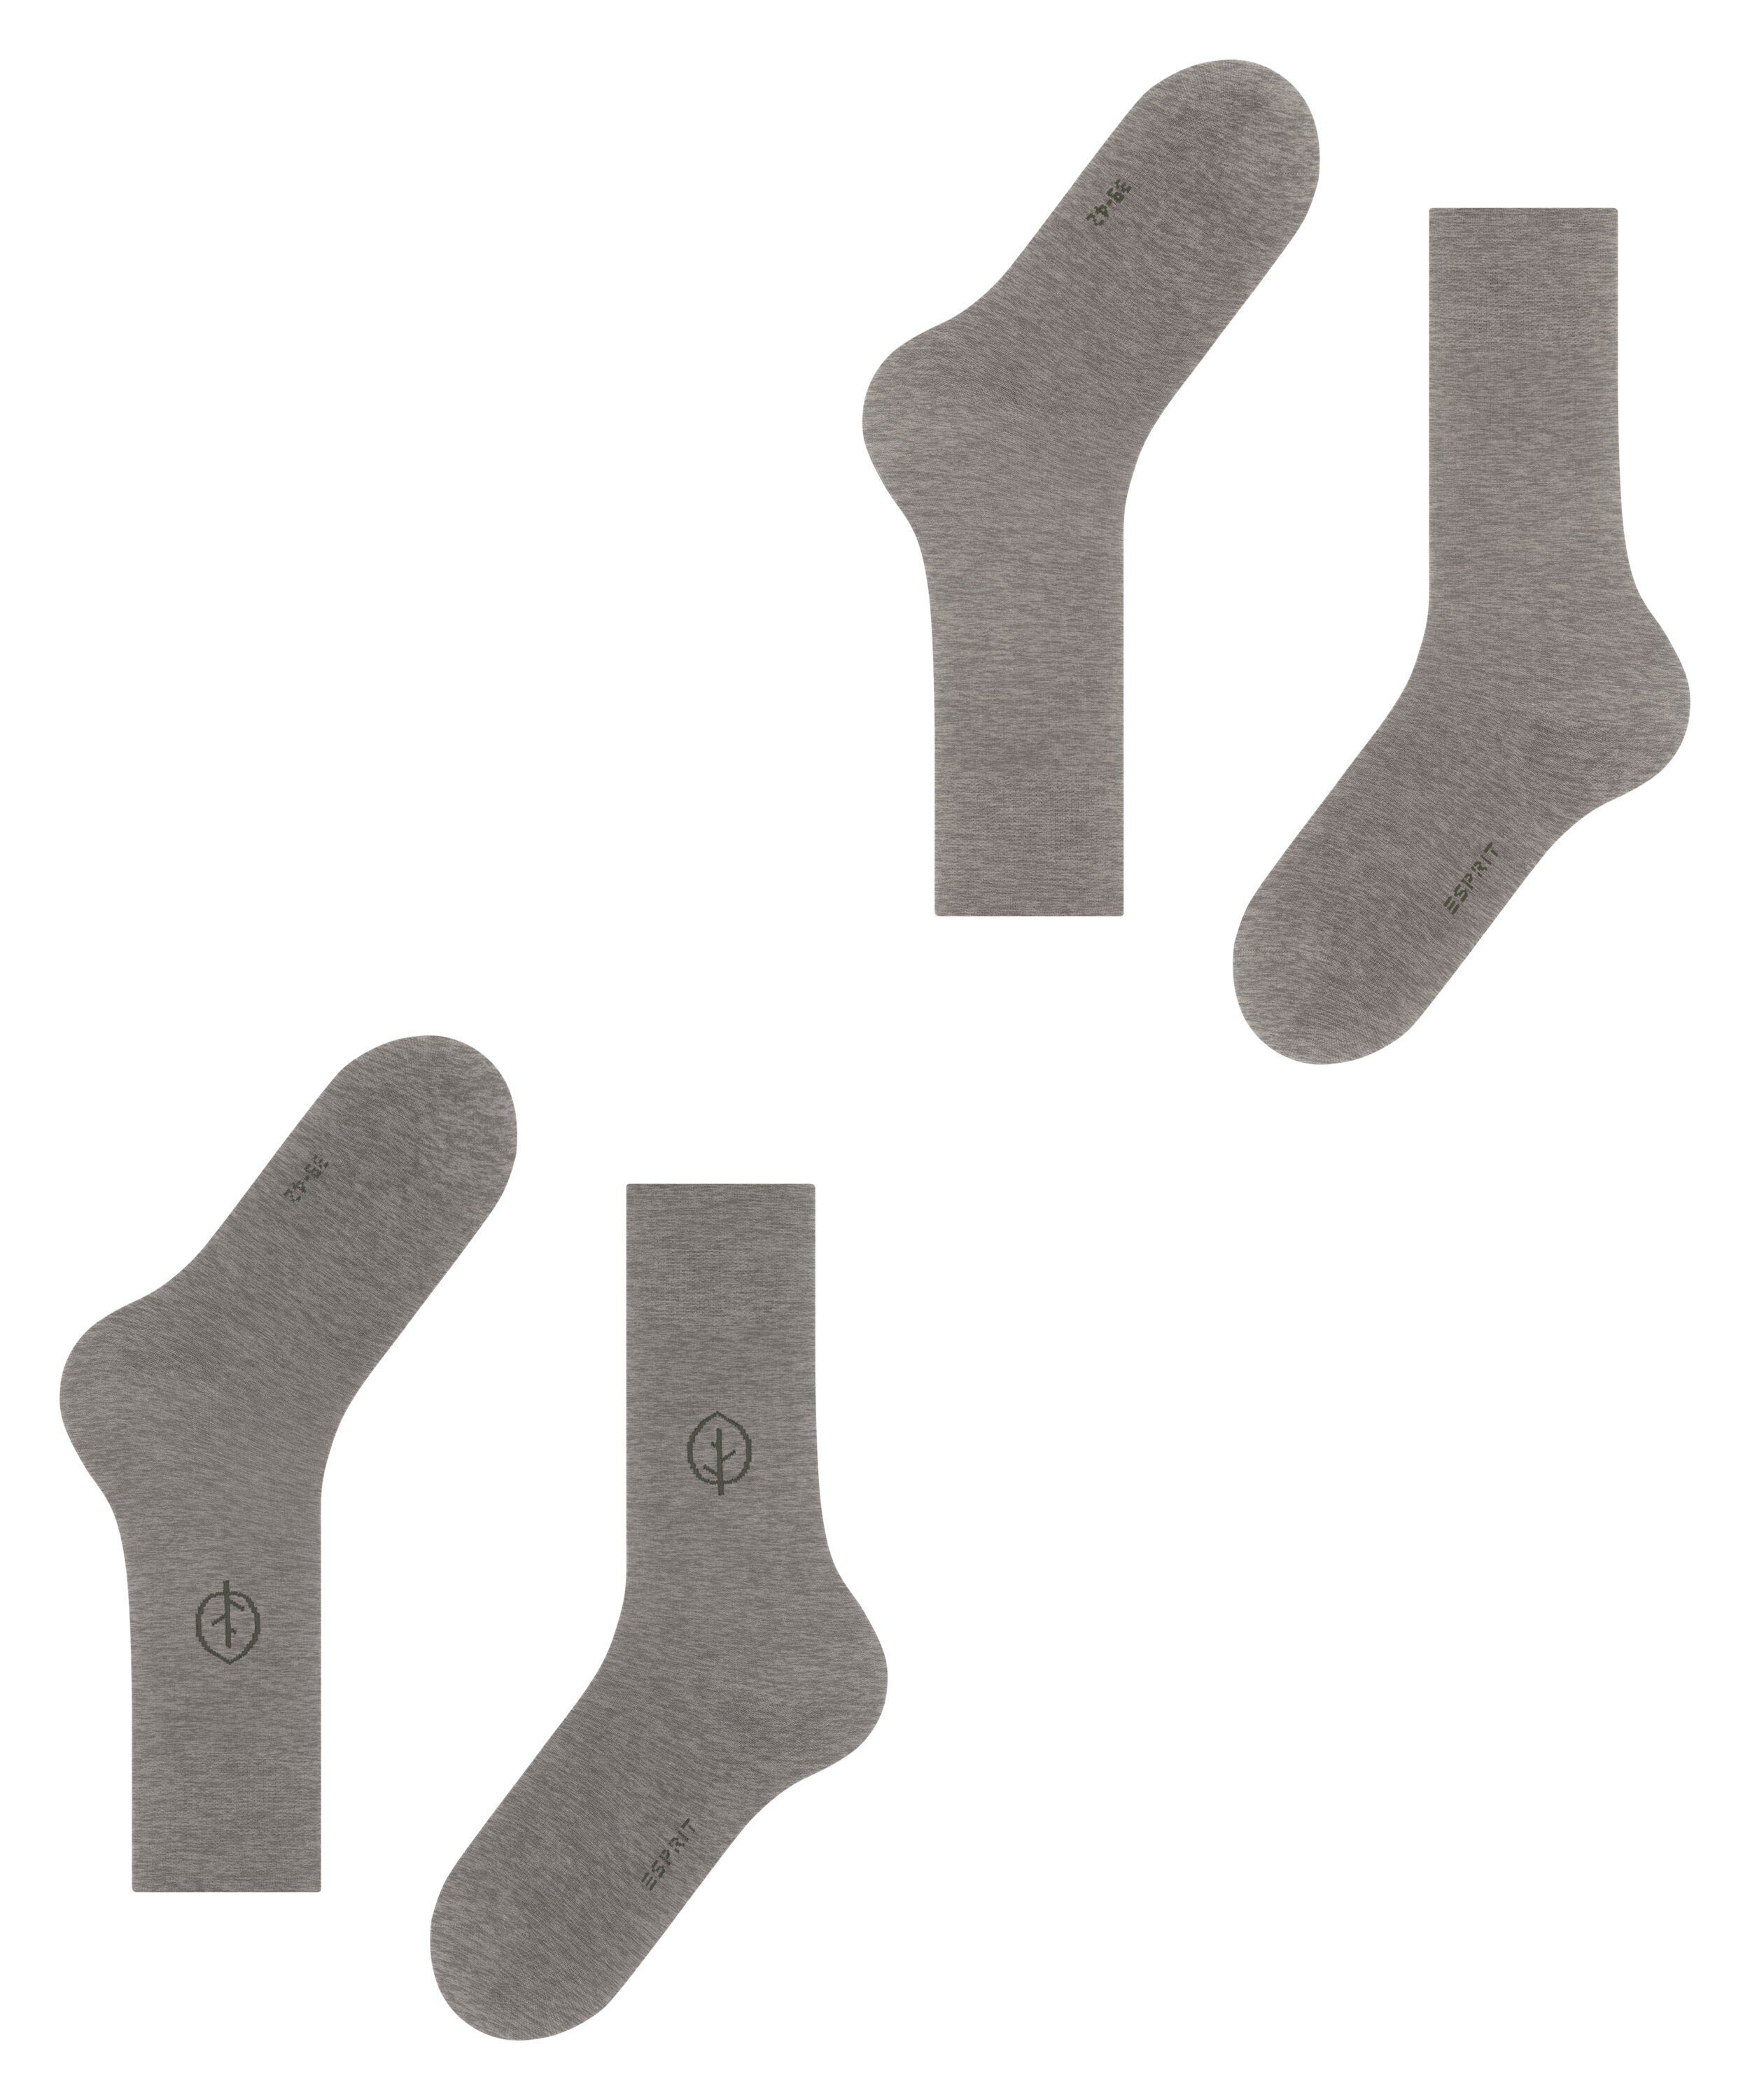 2-Pack Socken sortiment Esprit Forest (0030) (2-Paar)